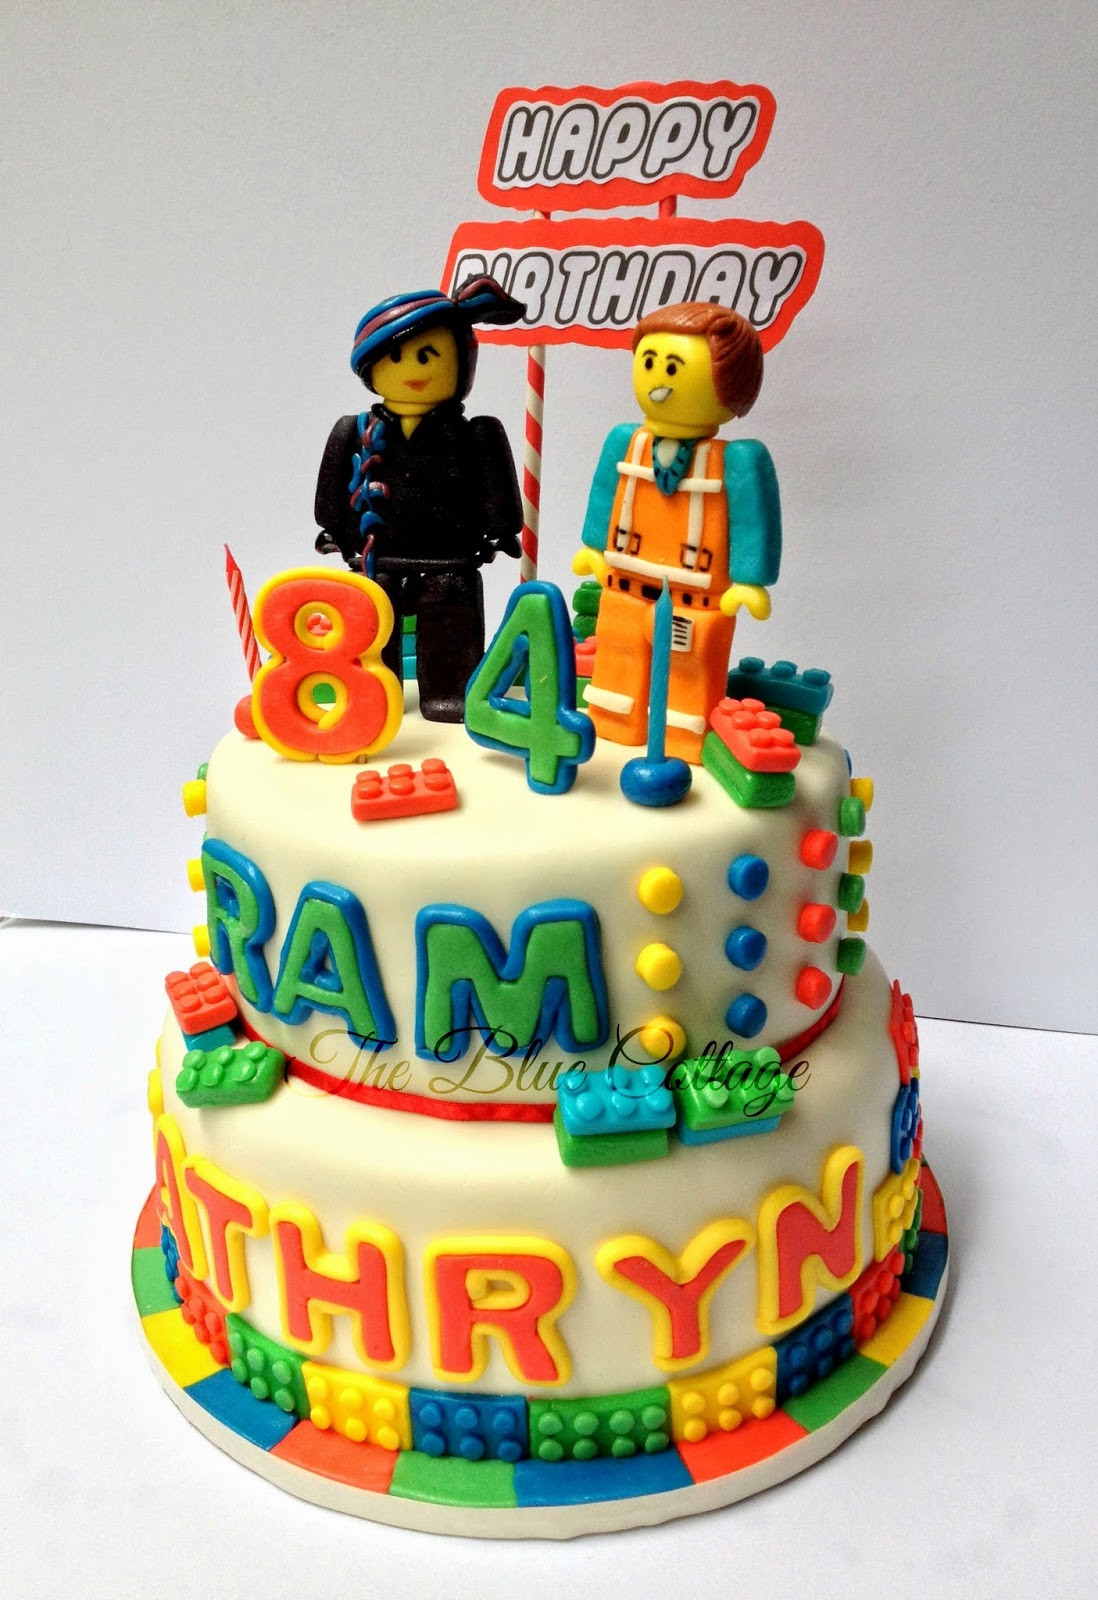 Lego Movie Birthday Cake
 The Blue Cottage Fondant Birthday Cake Lego Movie Emmet